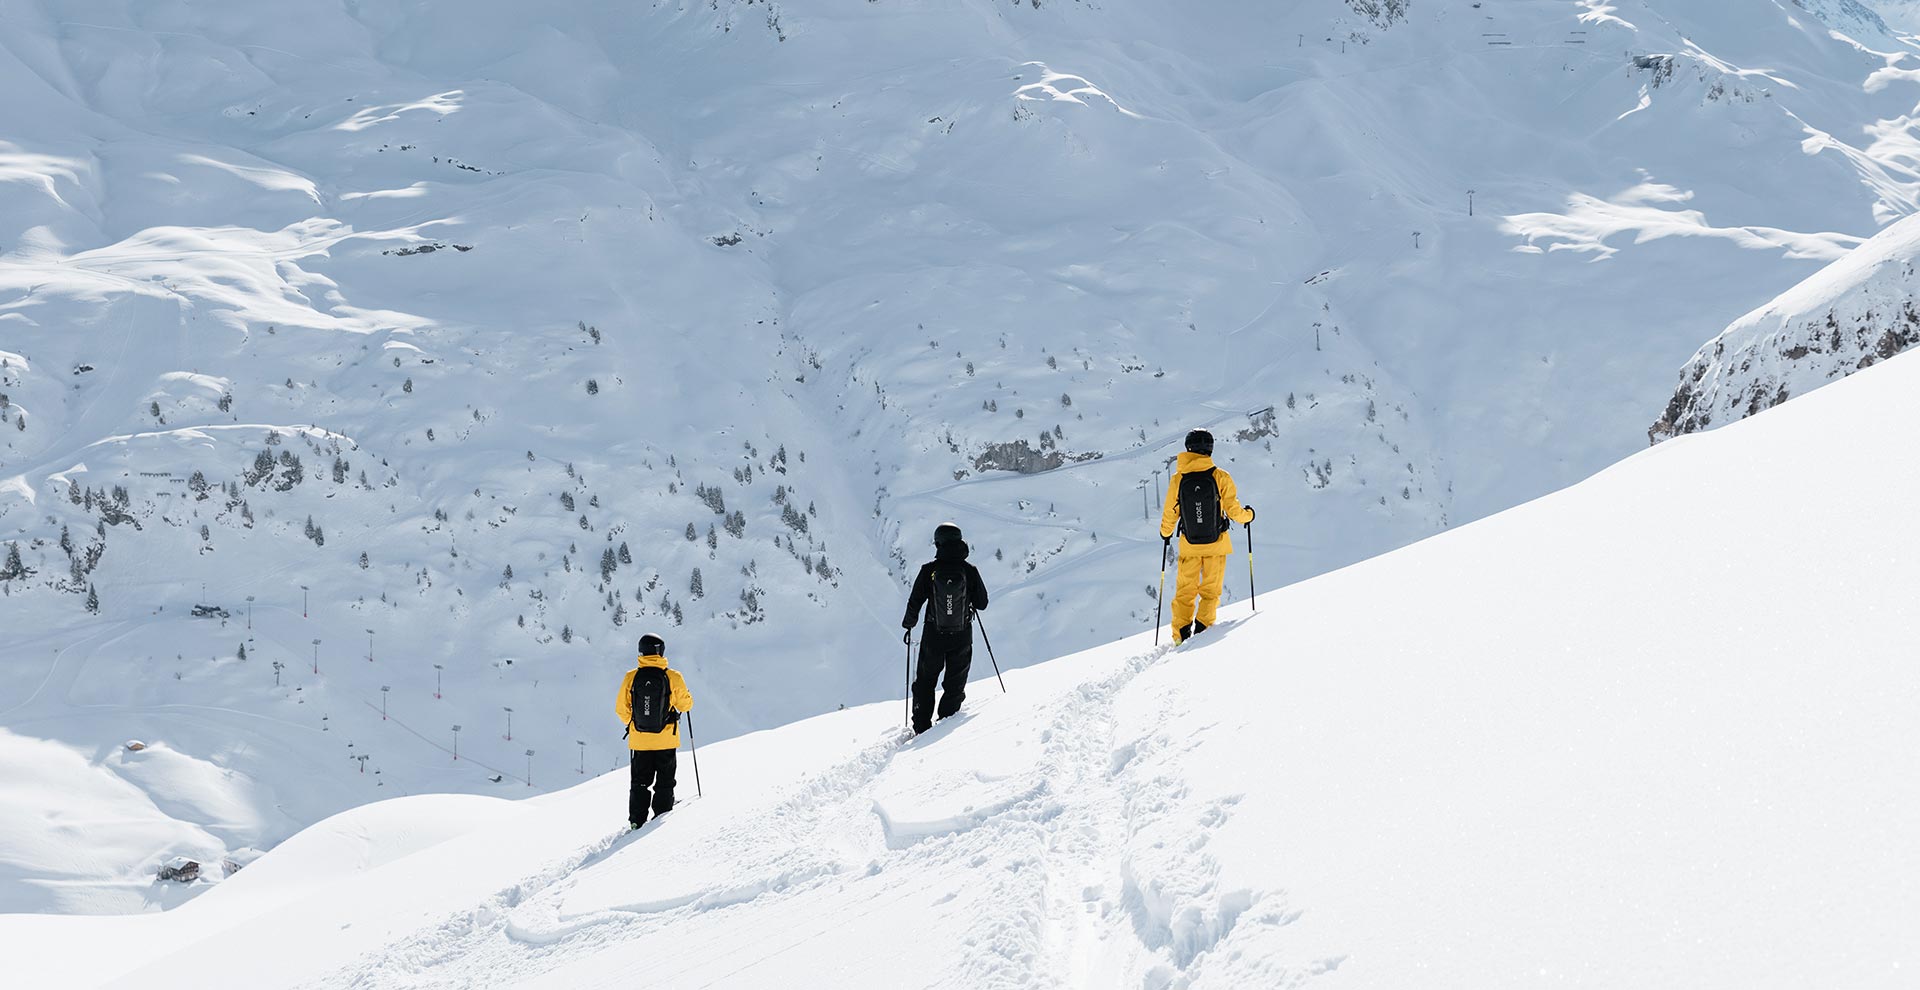 How to Ski Tour - Backcountry skiing